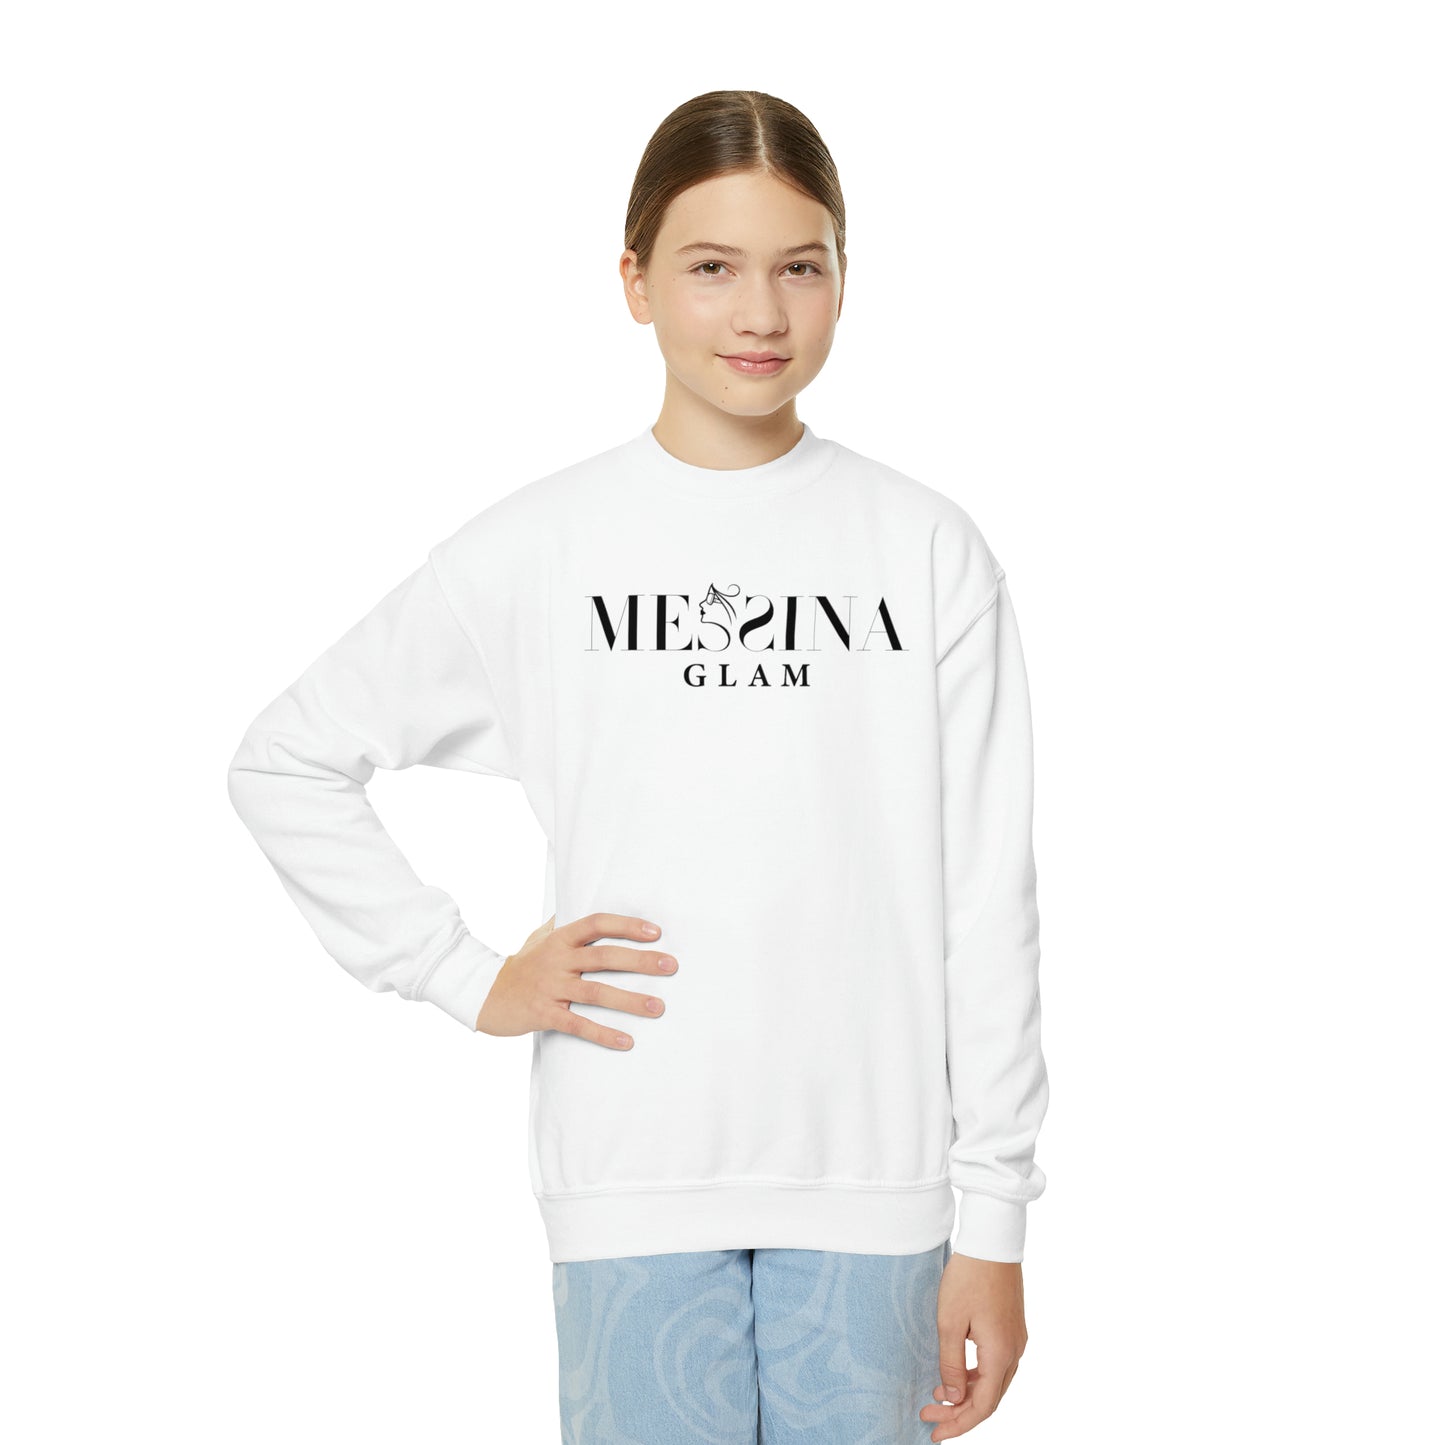 Messina Glam Youth Crewneck Sweatshirt